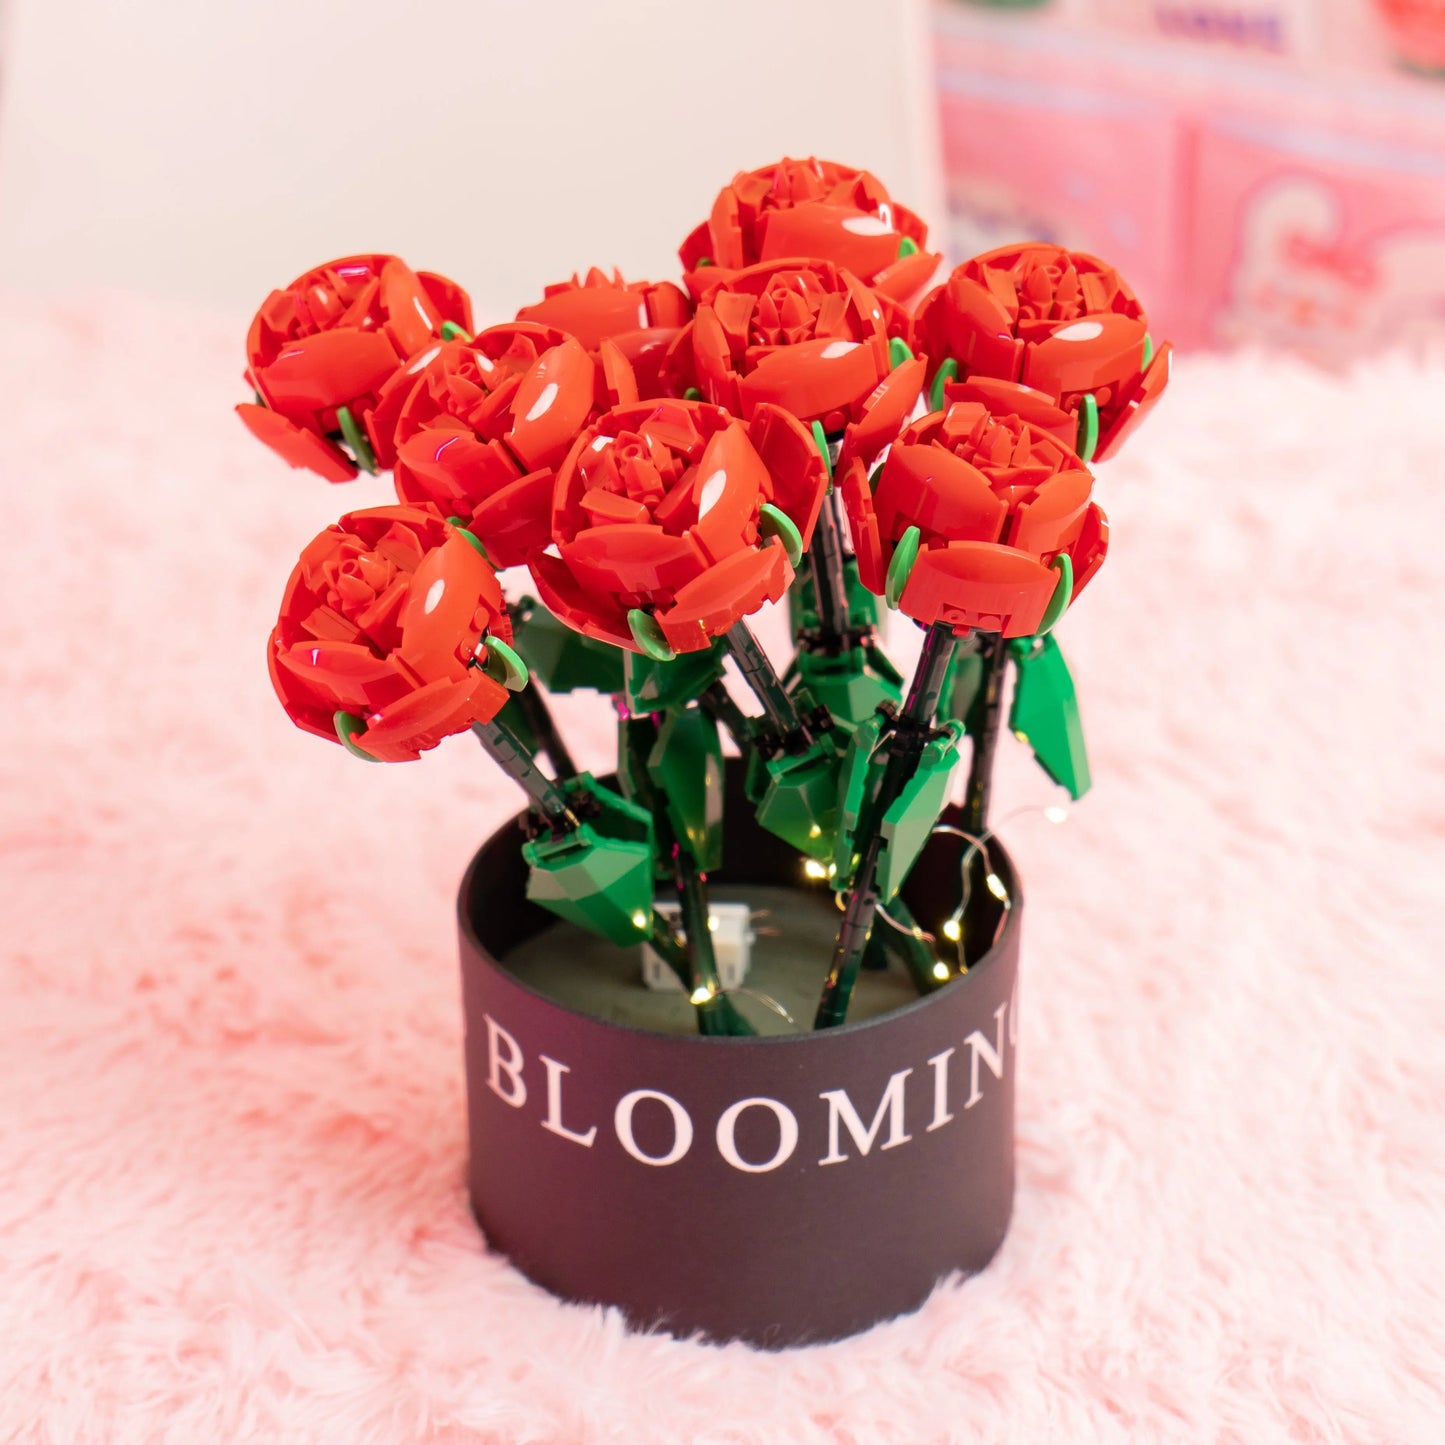 FairWonder Flowers Building Blocks For Anniversary and Valentine’s Day @anita.fiberartist